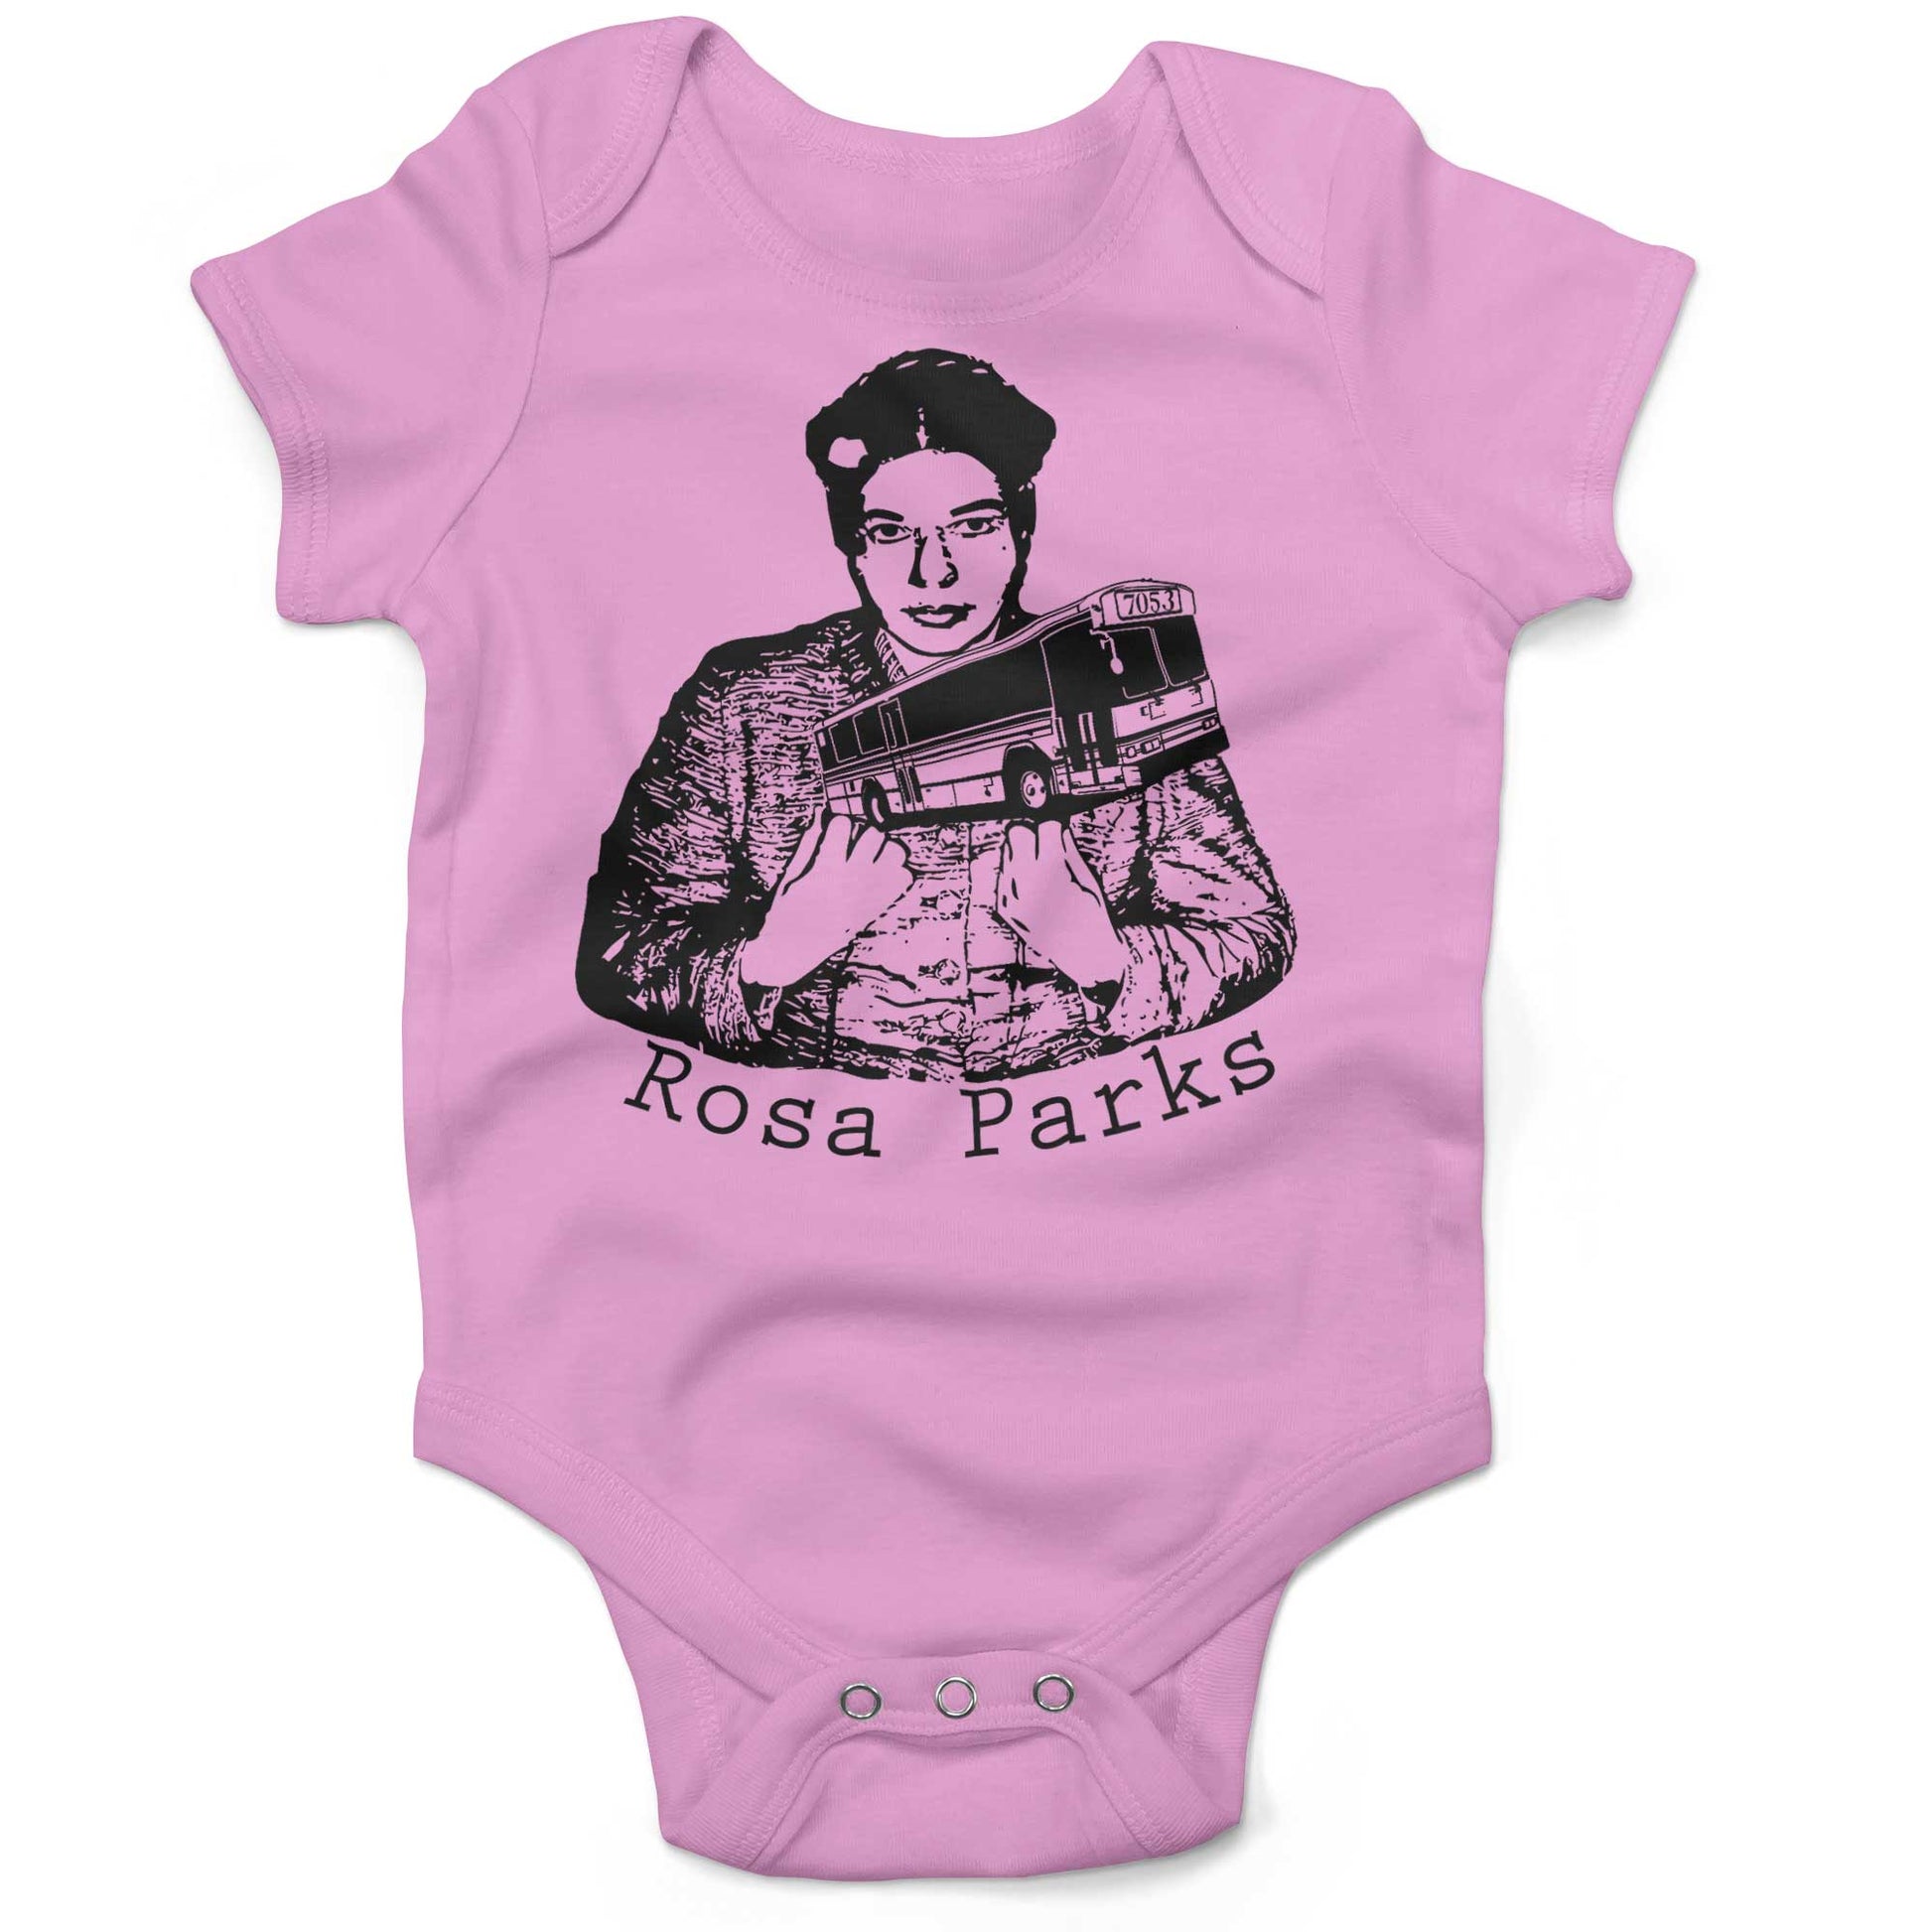 Rosa Parks Infant Bodysuit or Raglan Baby Tee-Organic Pink-3-6 months